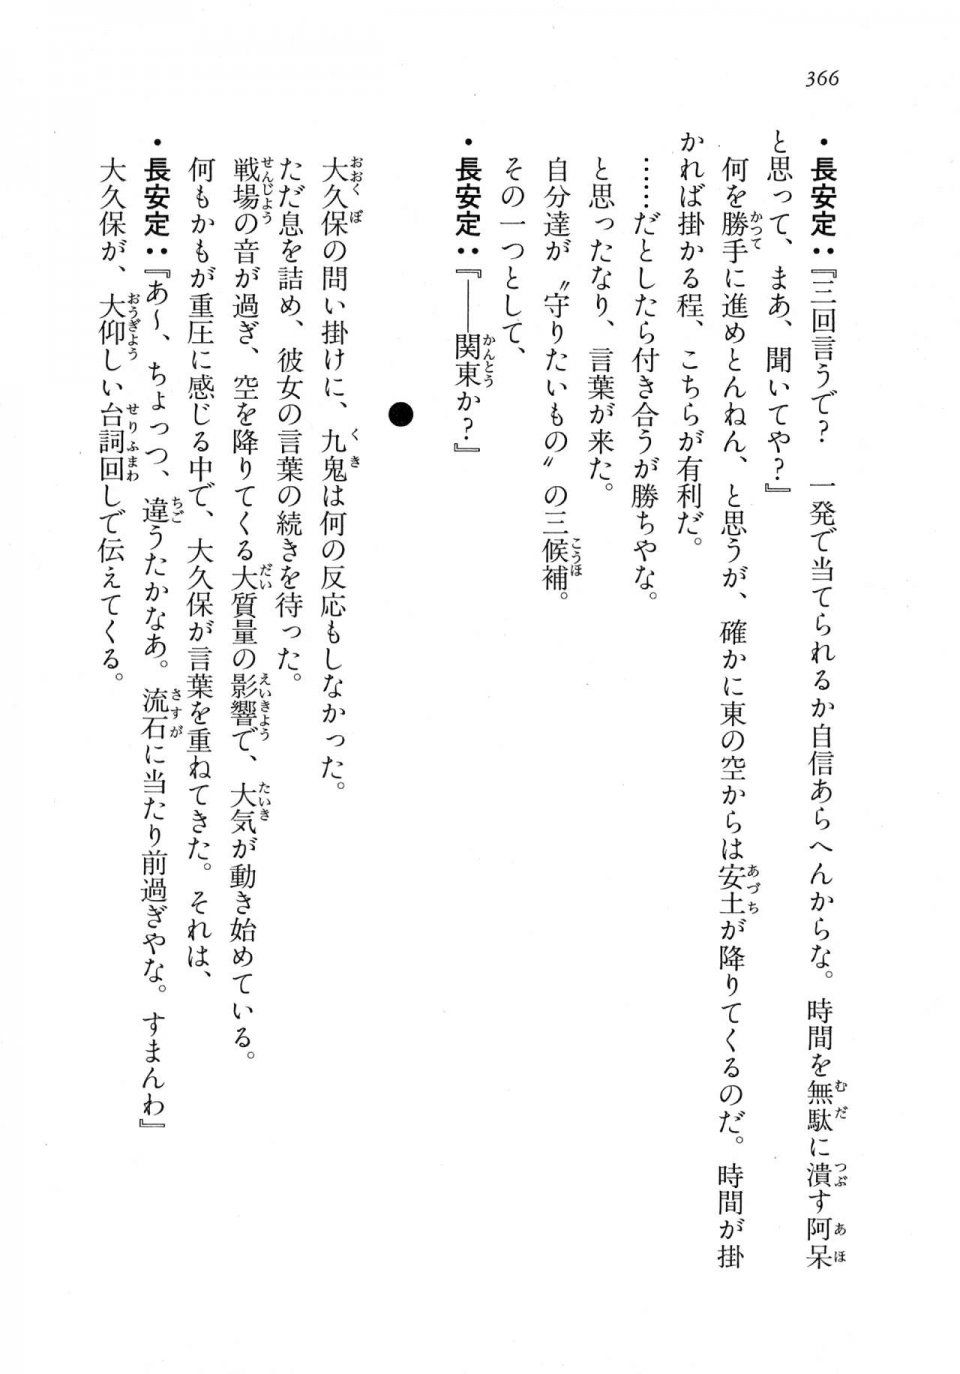 Kyoukai Senjou no Horizon LN Vol 18(7C) Part 1 - Photo #366